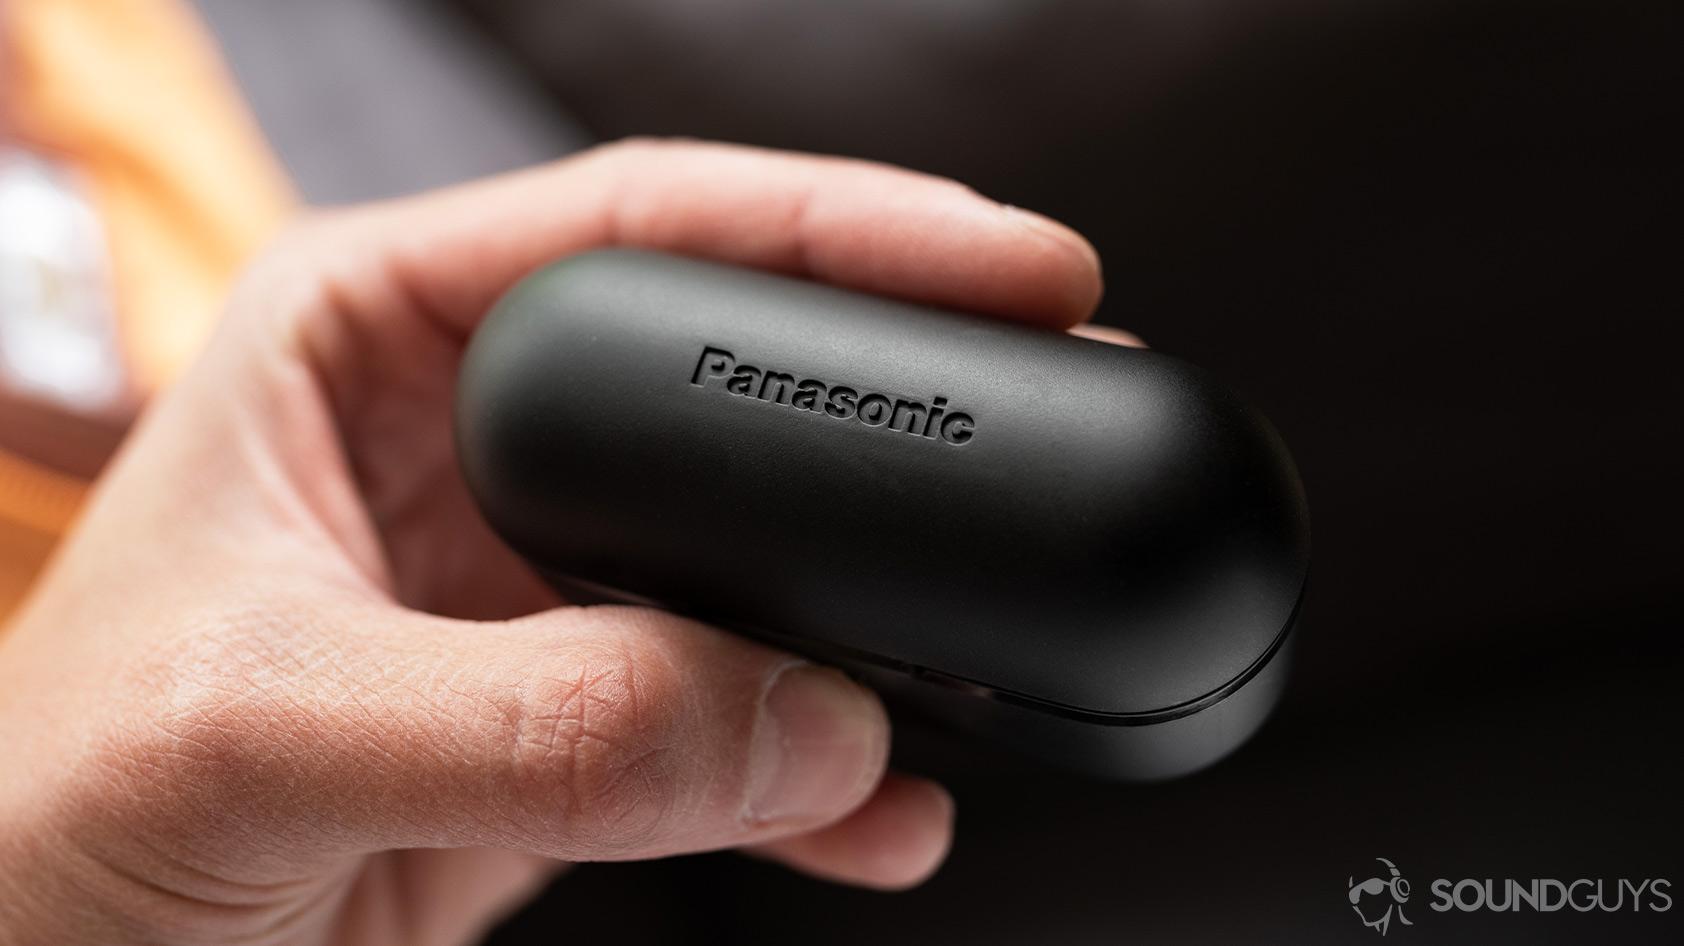 portable Affordable, RZ-S500W - SoundGuys Panasonic review: ANC